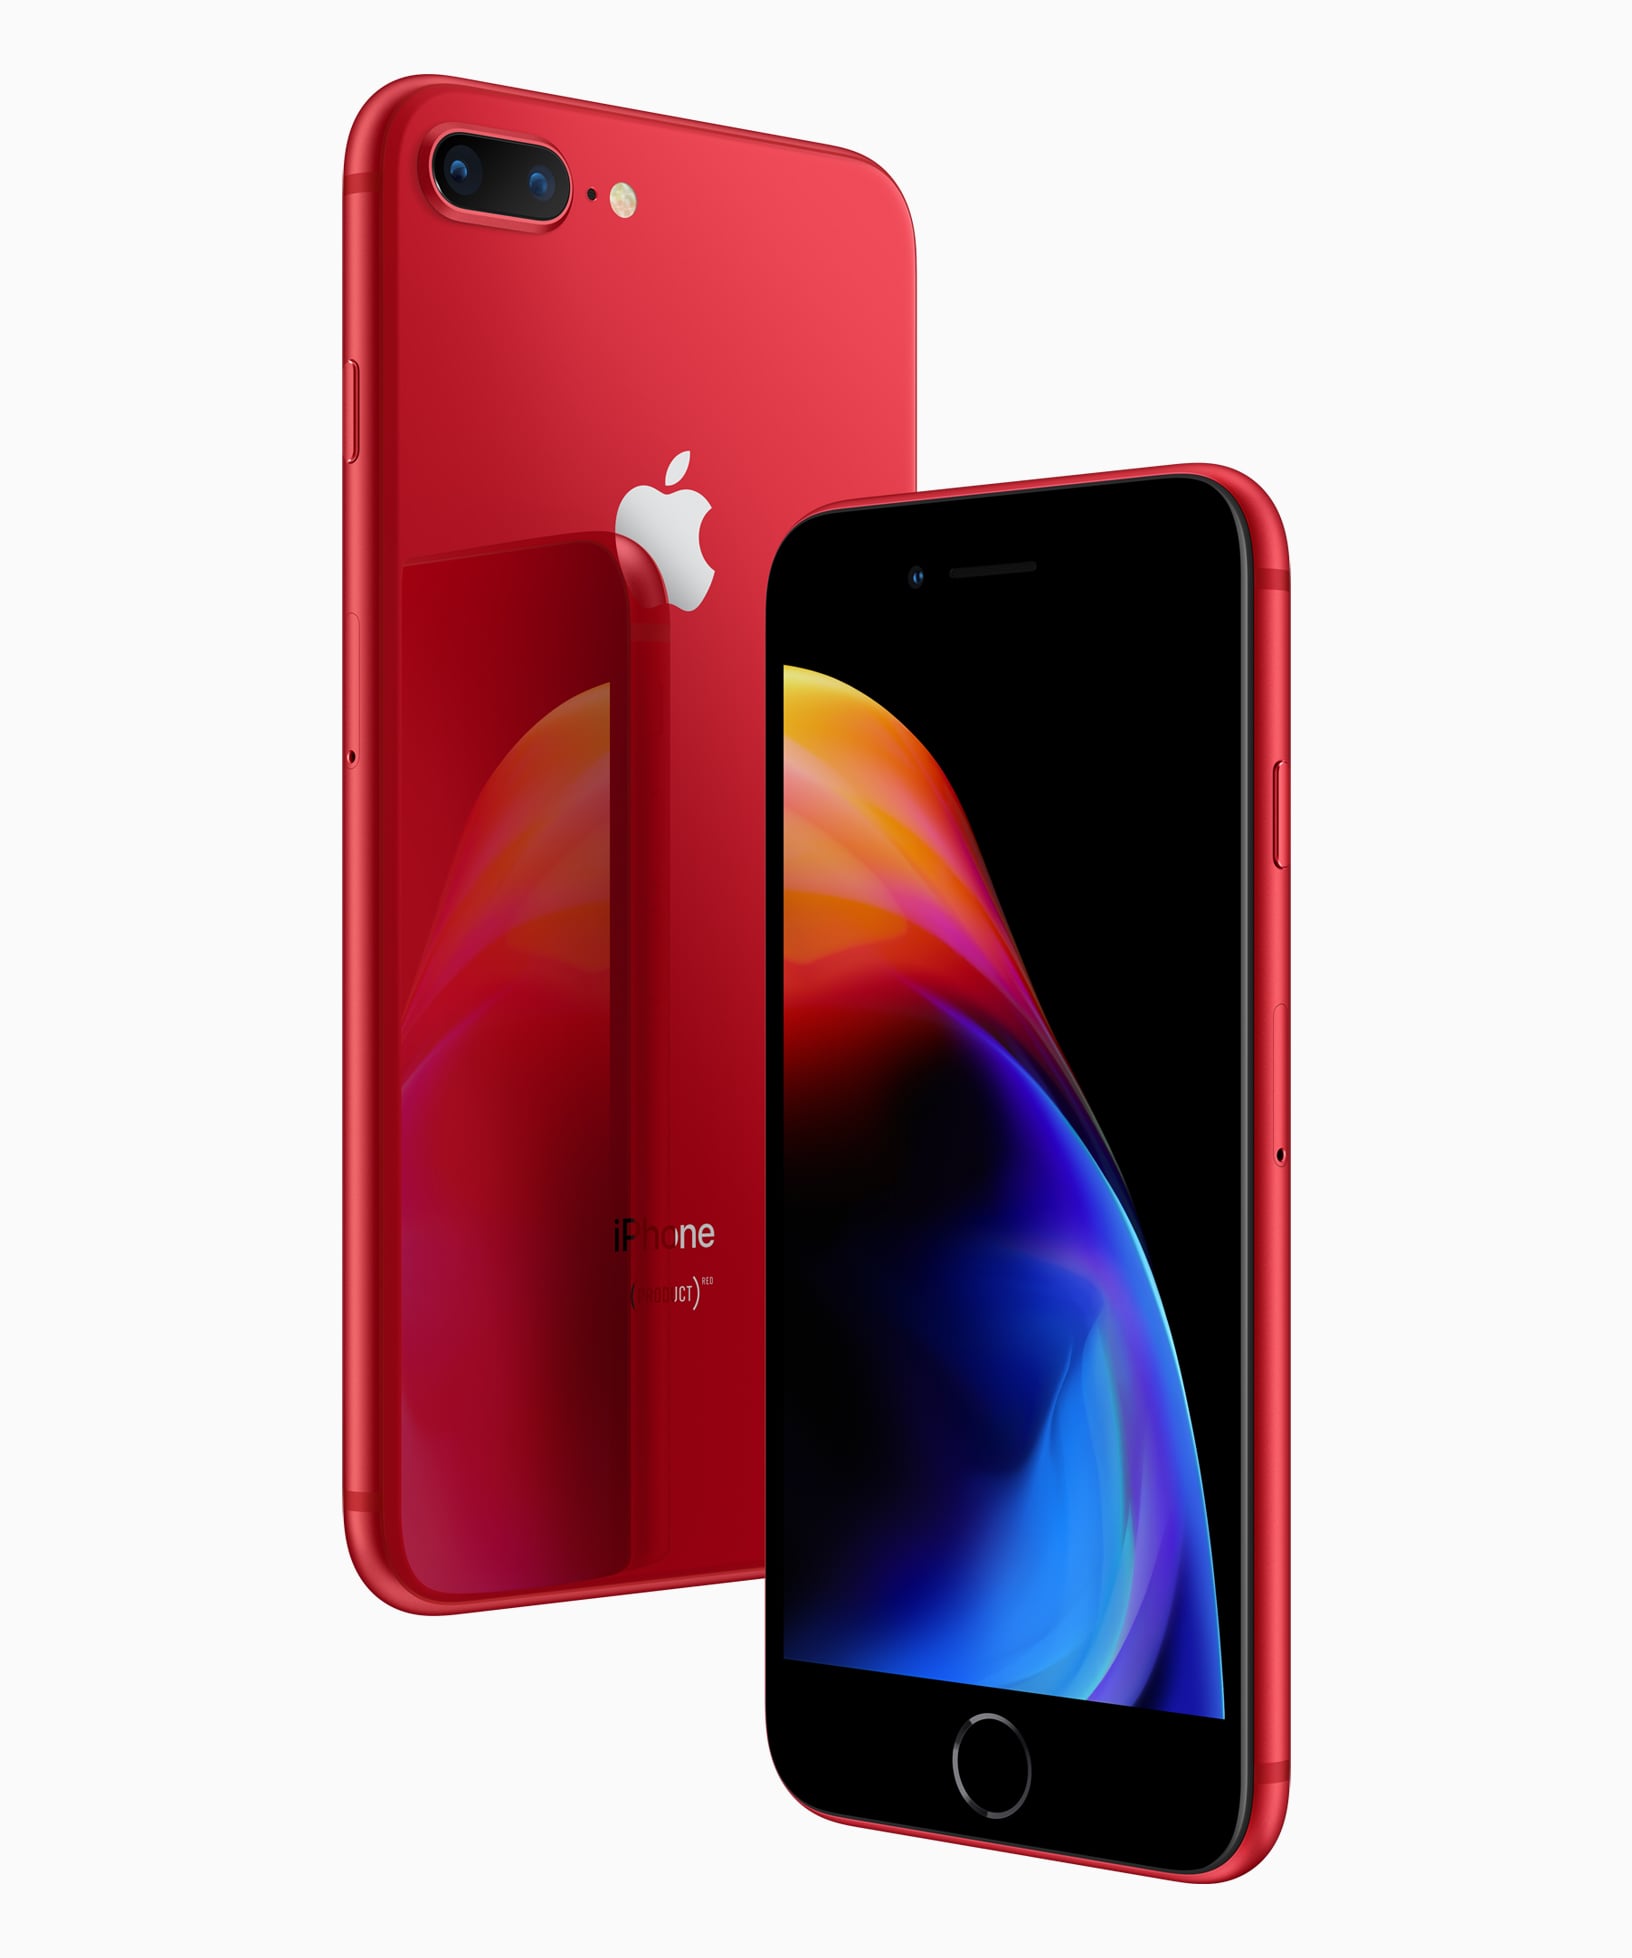 iPhone 8 و iPhone 8 Plus إصدار خاص باللون الأحمر Popsugar Middle East Tech